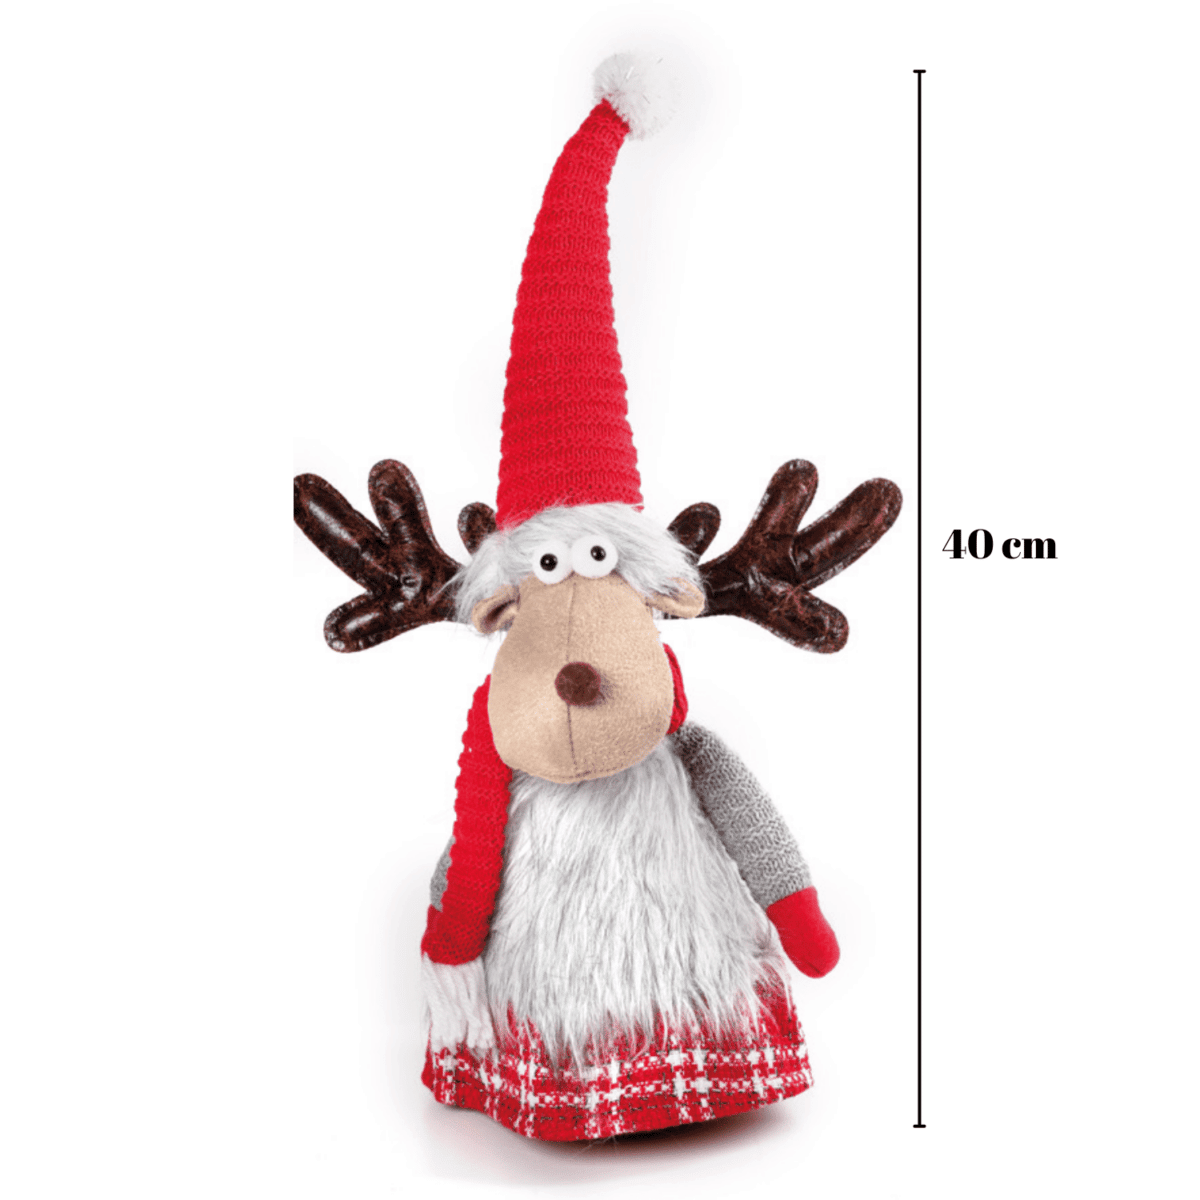 renna-lara-fritz-40-cm-elfi-gnomi-pupazzi-natale-decorazioni-natalizie-misure